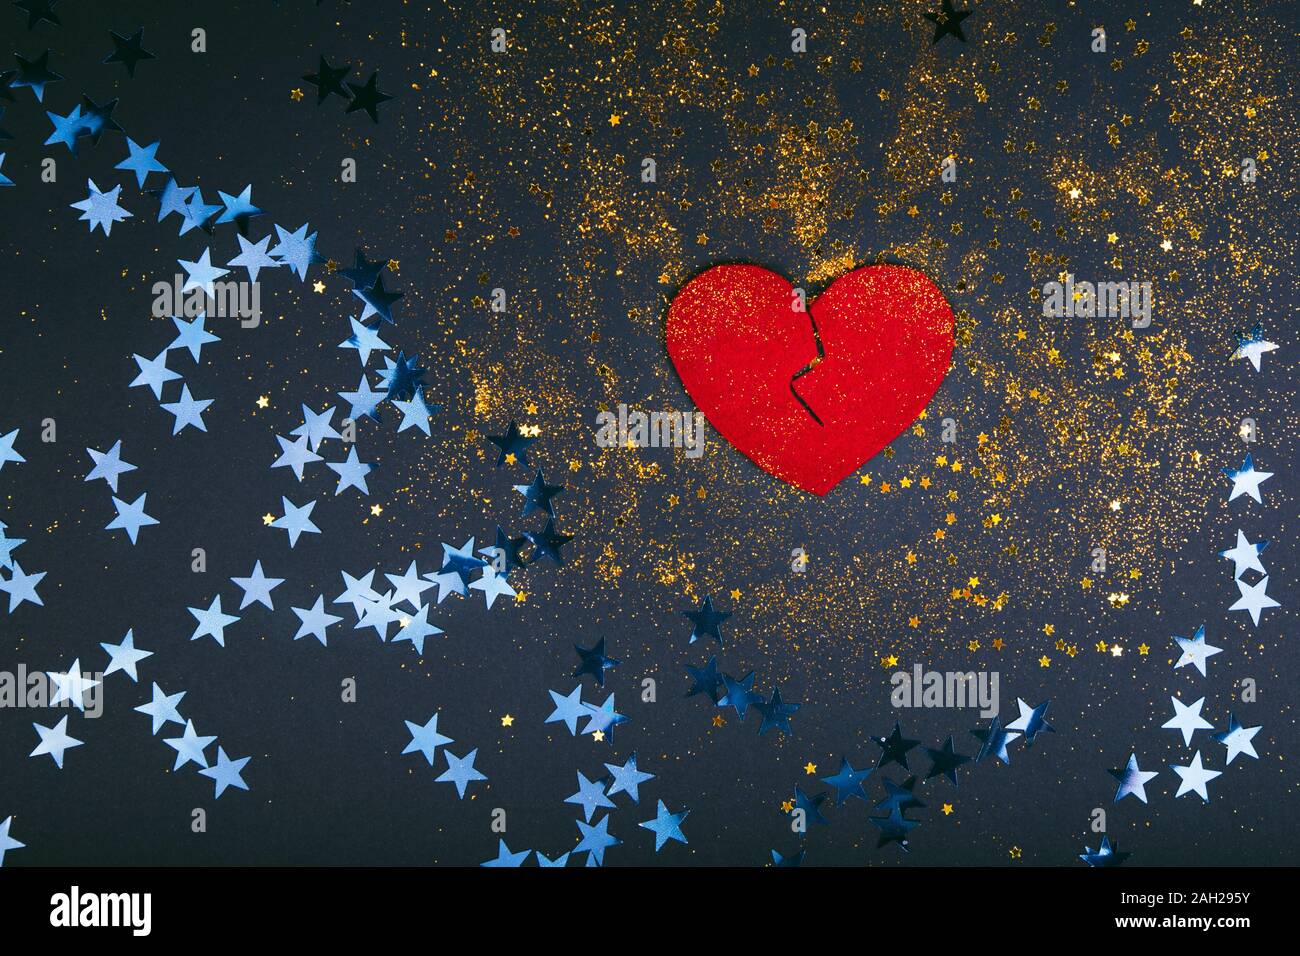 Heart broken on black background - love concept Stock Photo - Alamy